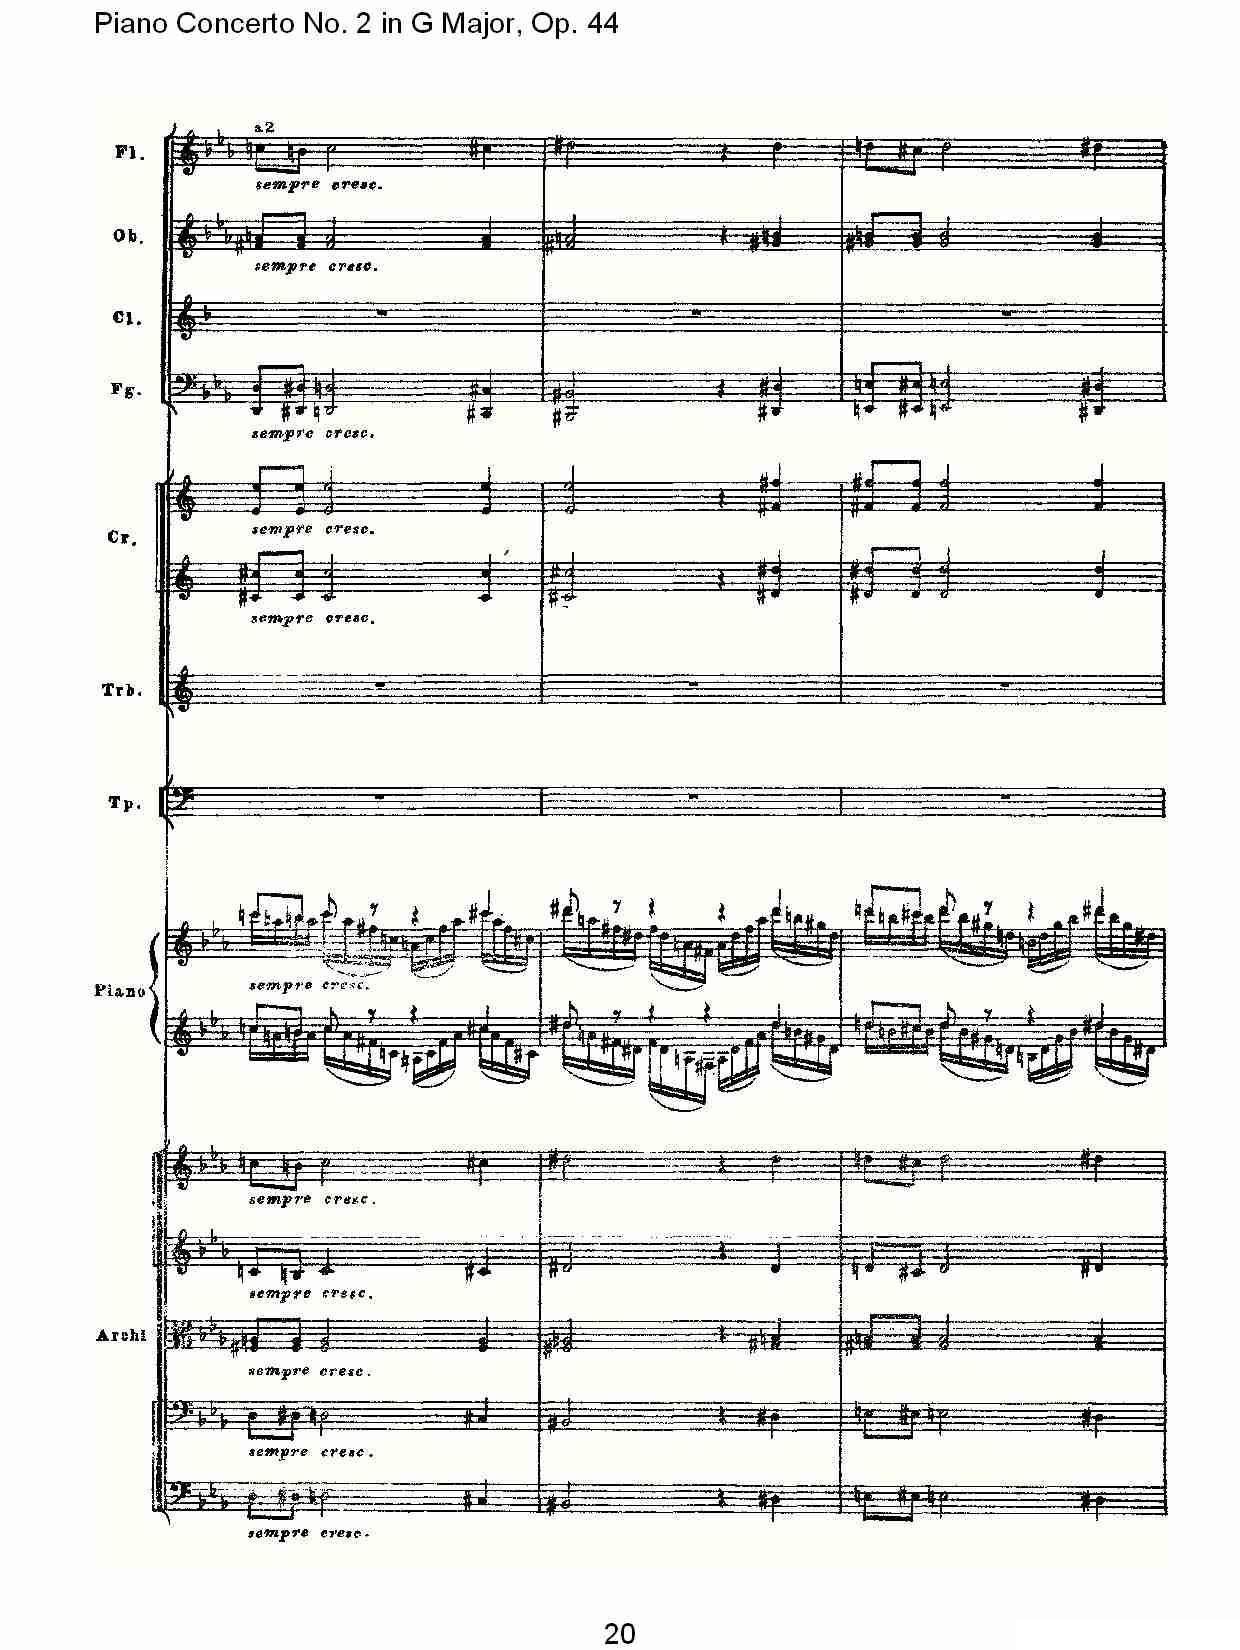 G大调第二钢琴协奏曲, Op.44第一乐章（一）钢琴曲谱（图20）